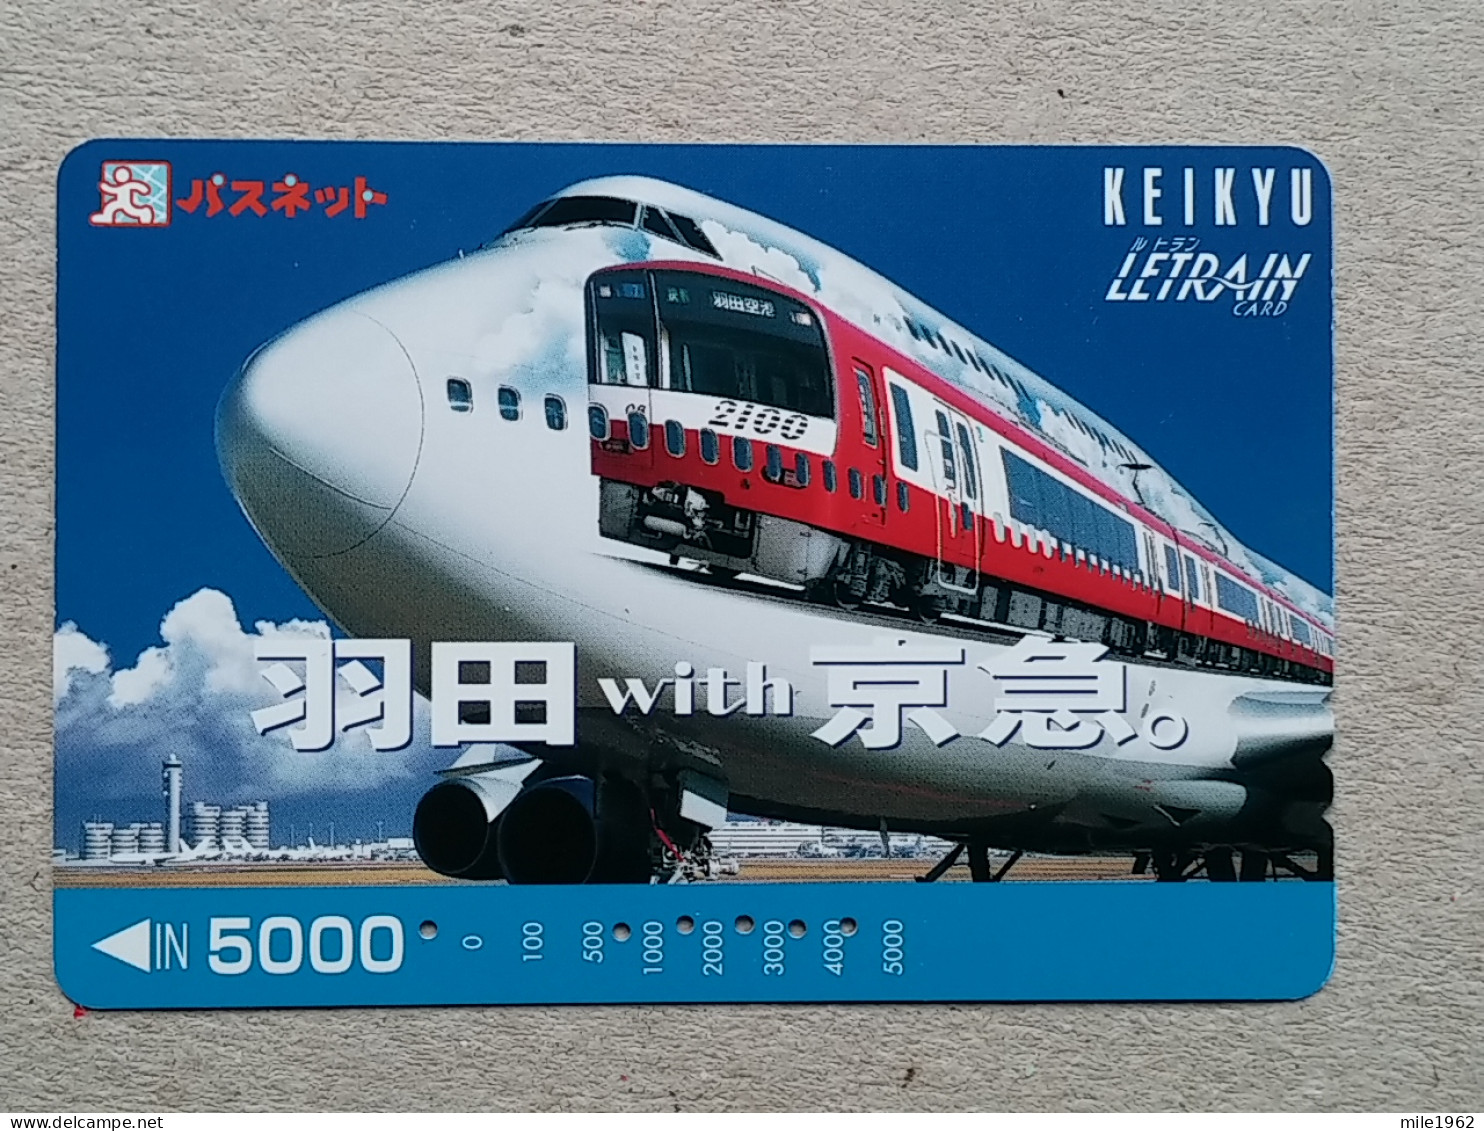 T-557- JAPAN, Japon, Nipon, Carte Prepayee, Prepaid Card, RAILWAY, TRAIN, CHEMIN DE FER, AVION, PLANE, AVIO - Trenes